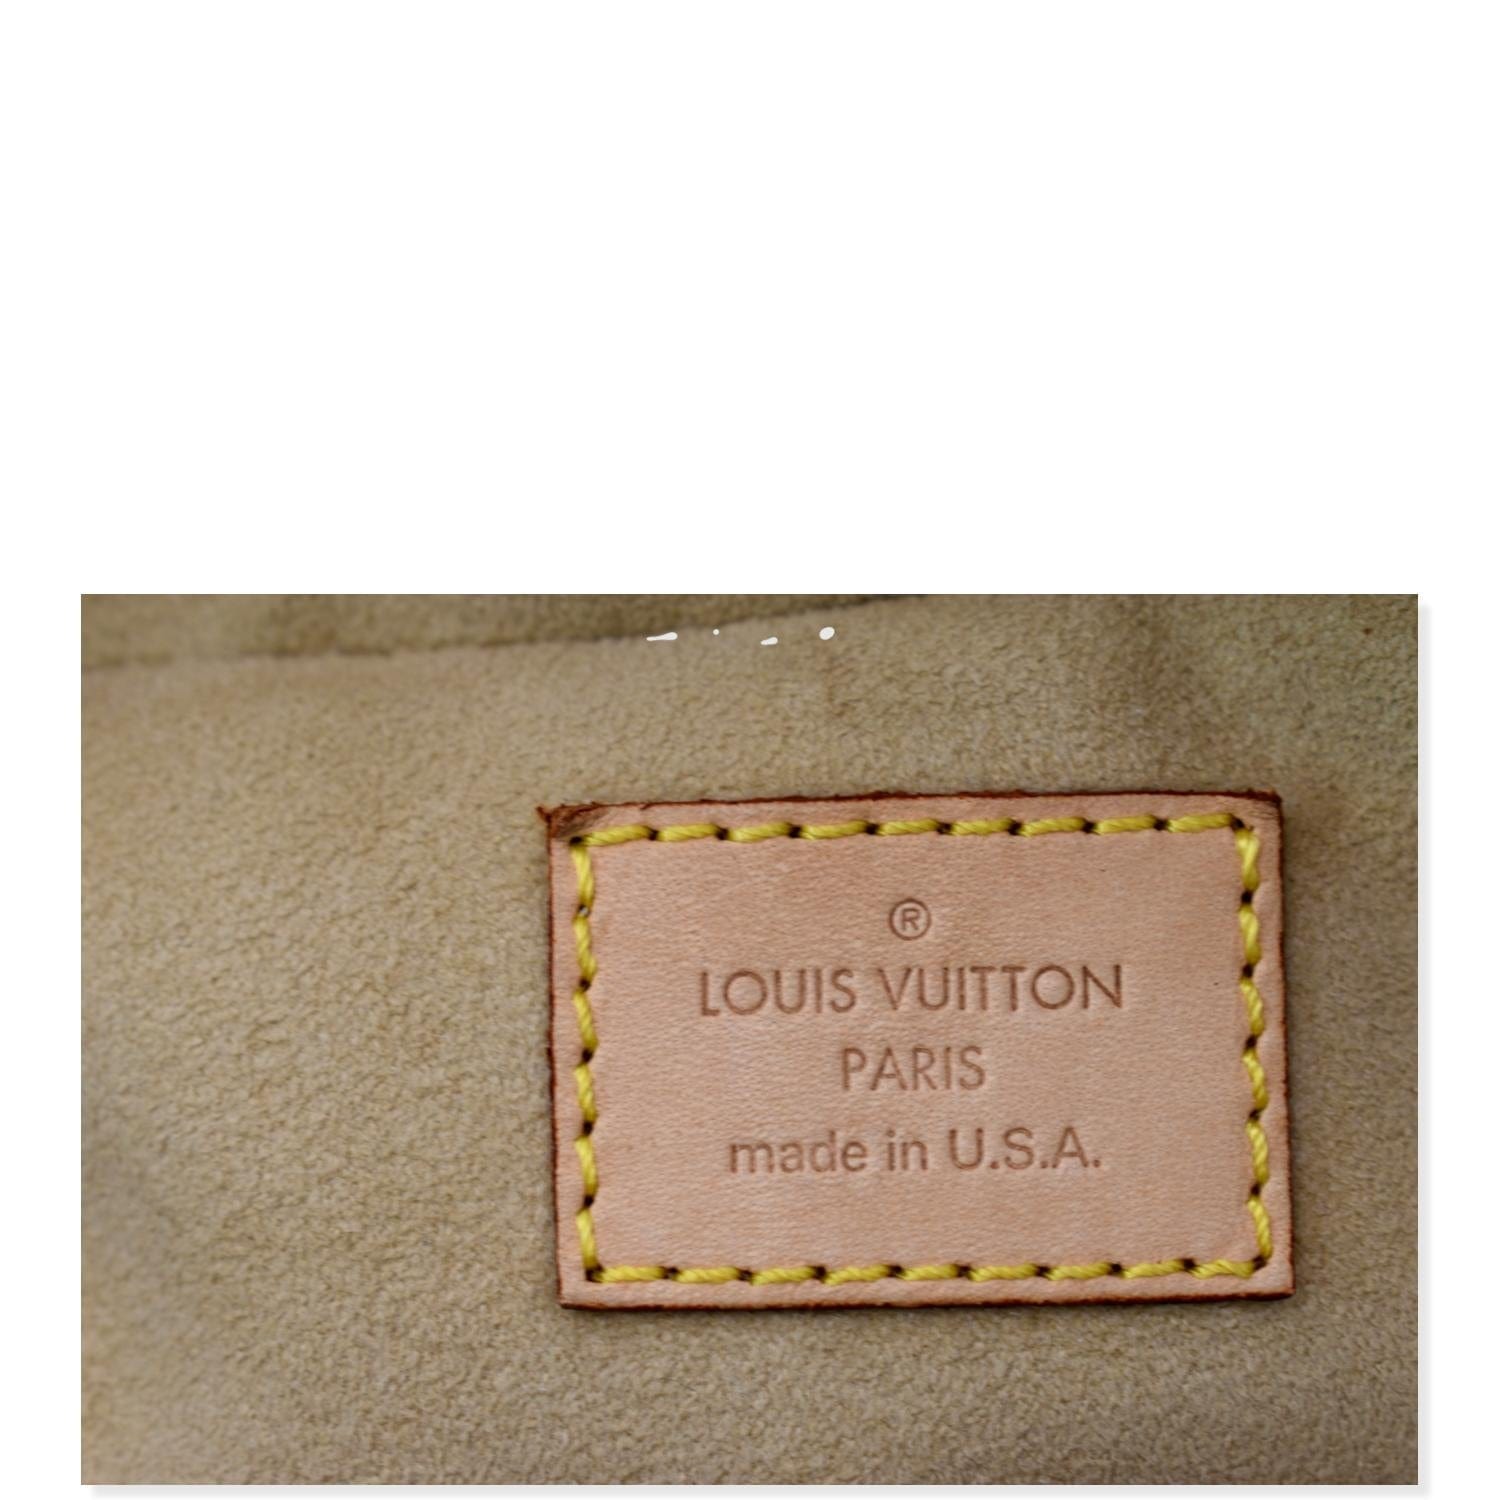 Buy Luxury Louis Vuitton Monogram Canvas Manhattan PM Bag Online